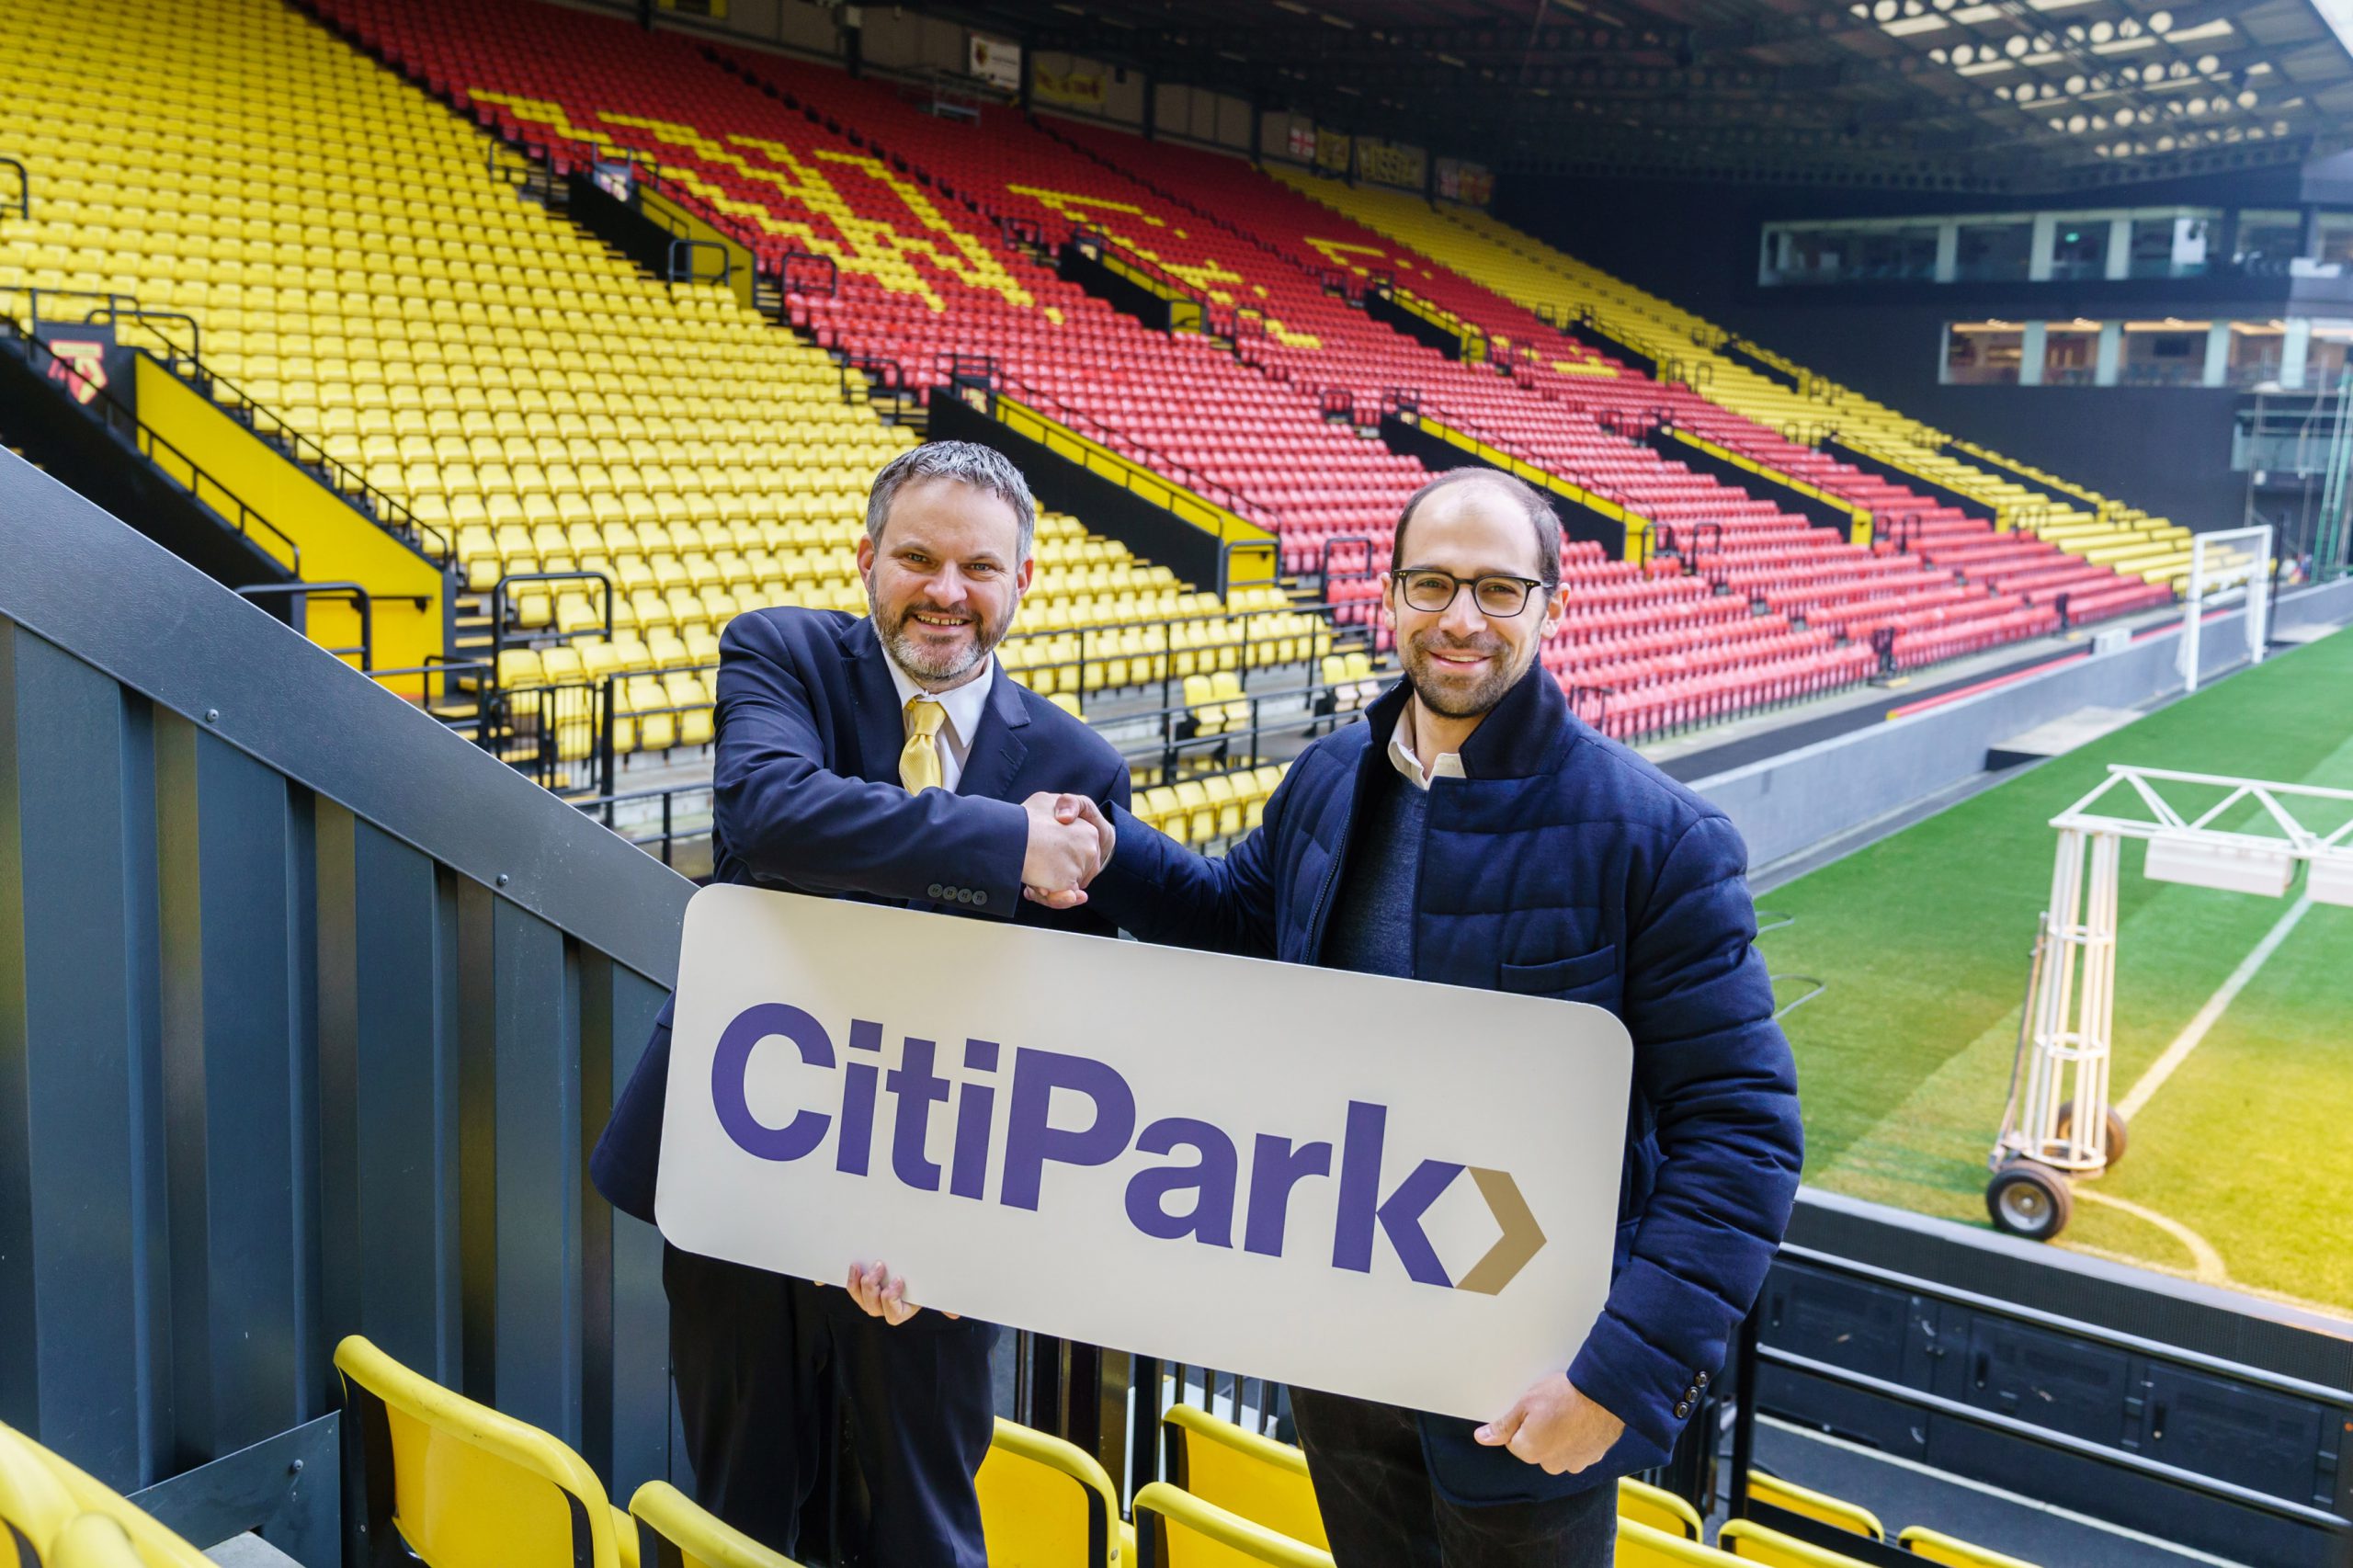 CitiPark kicks off new partnership with Watford FC